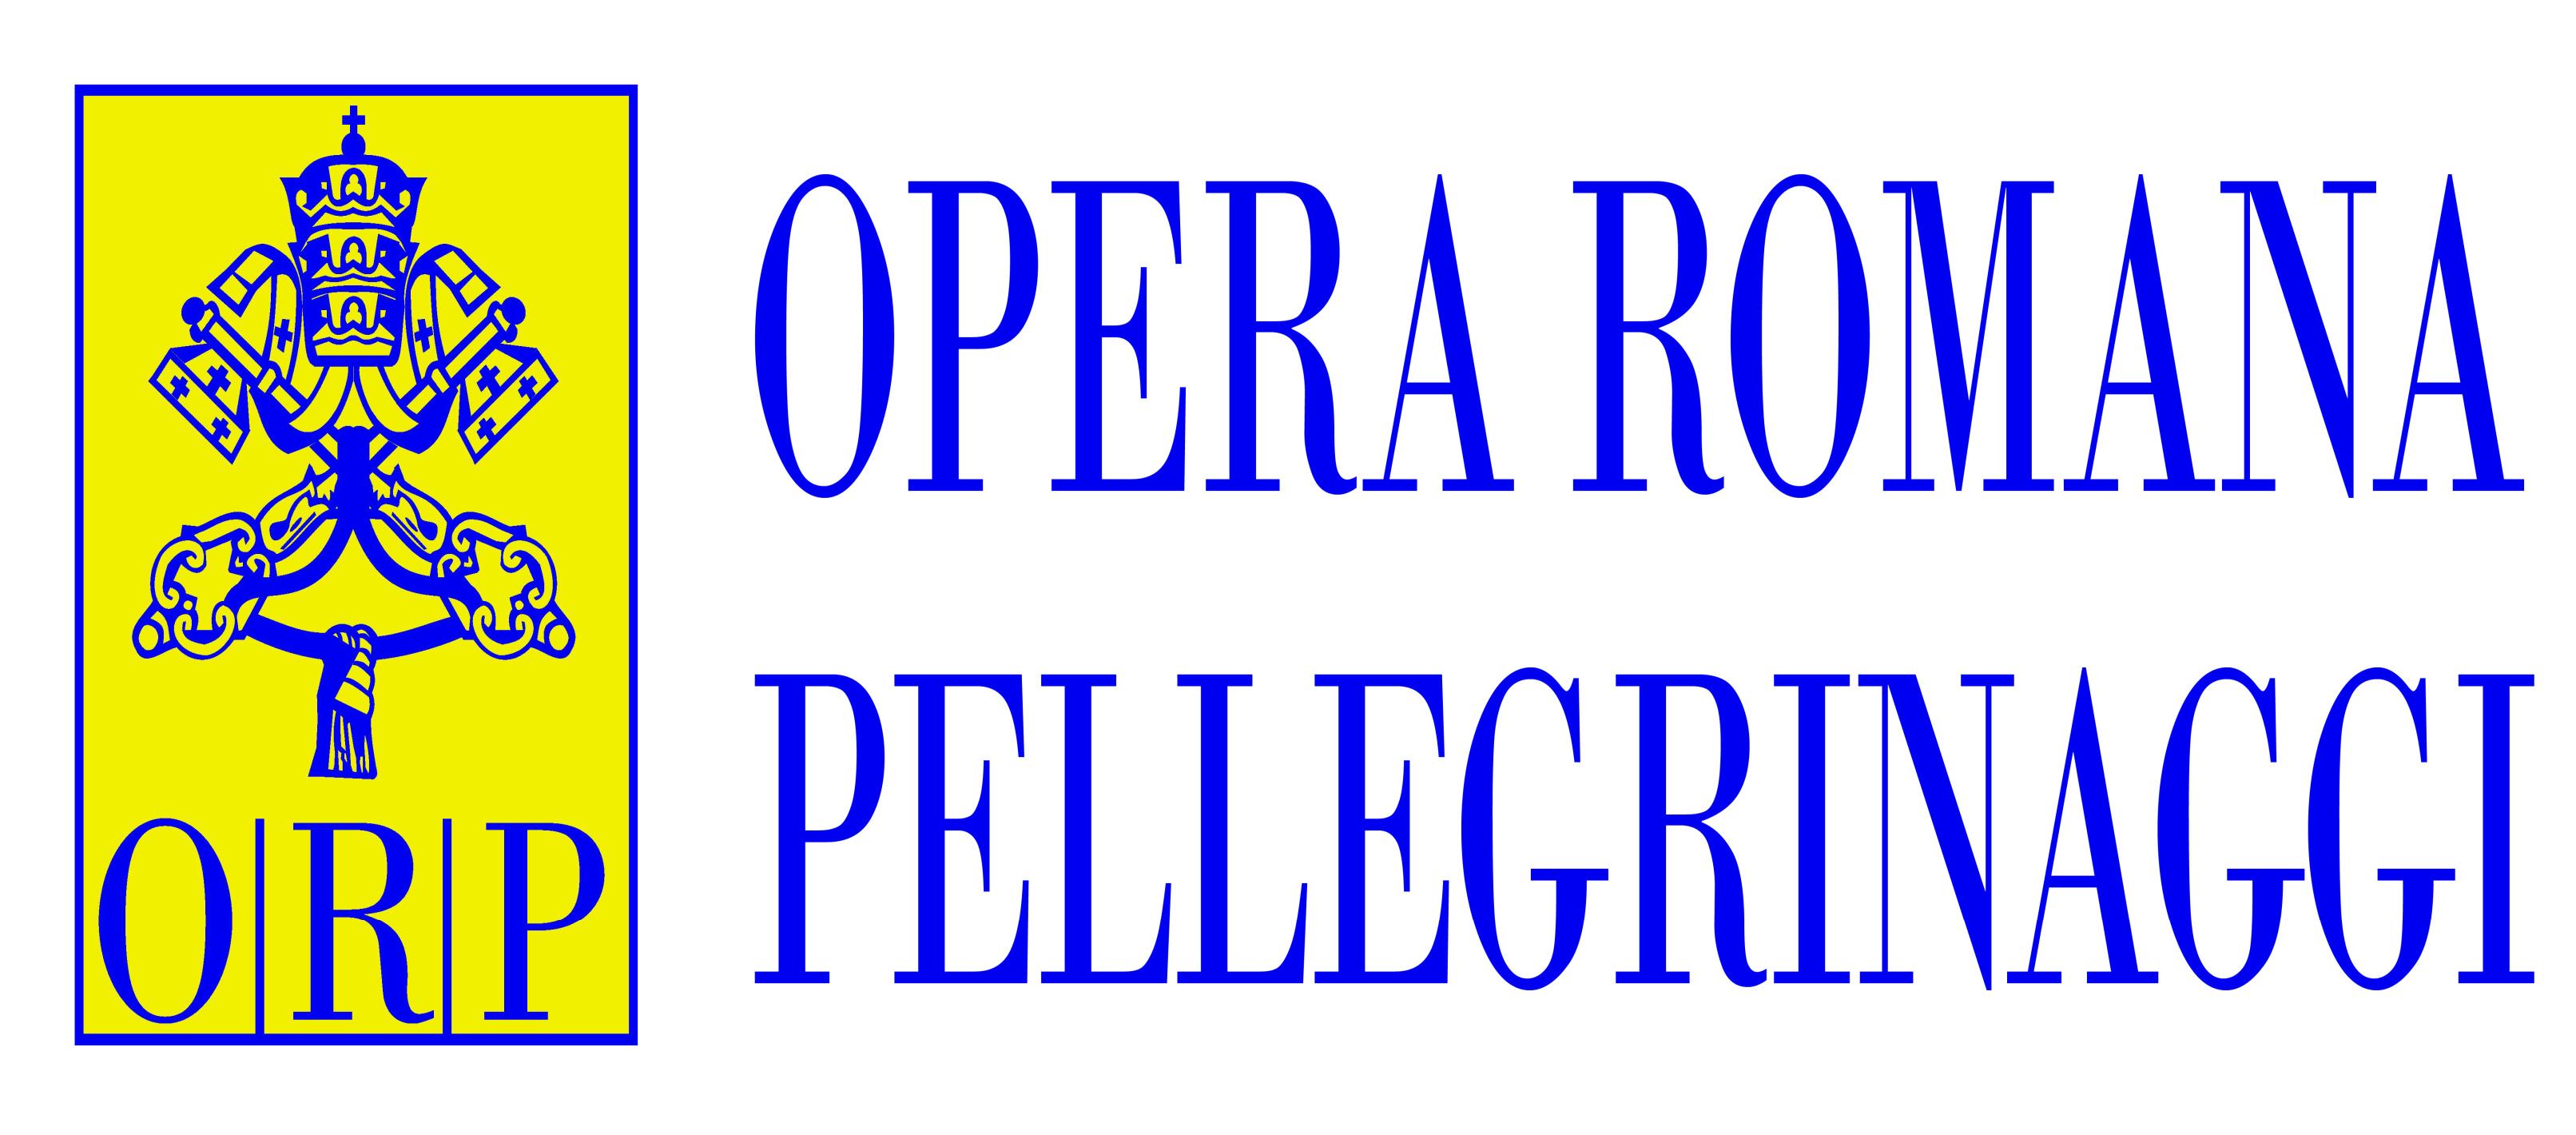 20120914123434!Opera_Romana_Pellegrinaggi